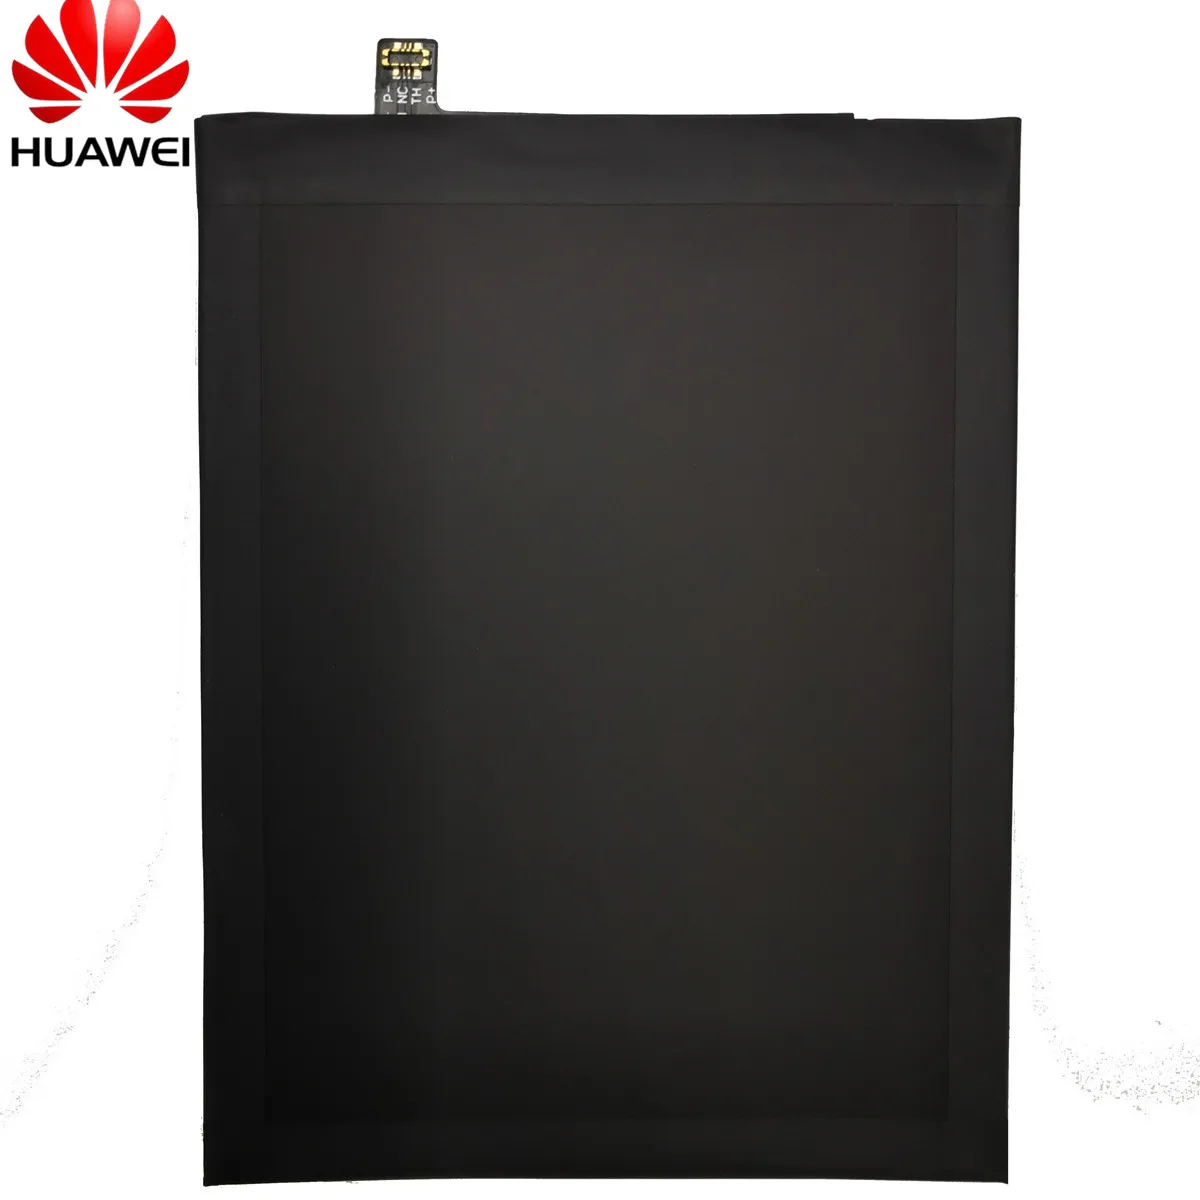  - 100% Original Battery HB356687ECW For Huawei Nova 2Plus 2i 2S 3i 4e Huawei P30 Lite Mate SE G10 Mate 10 Lite Honor 7X / 9i